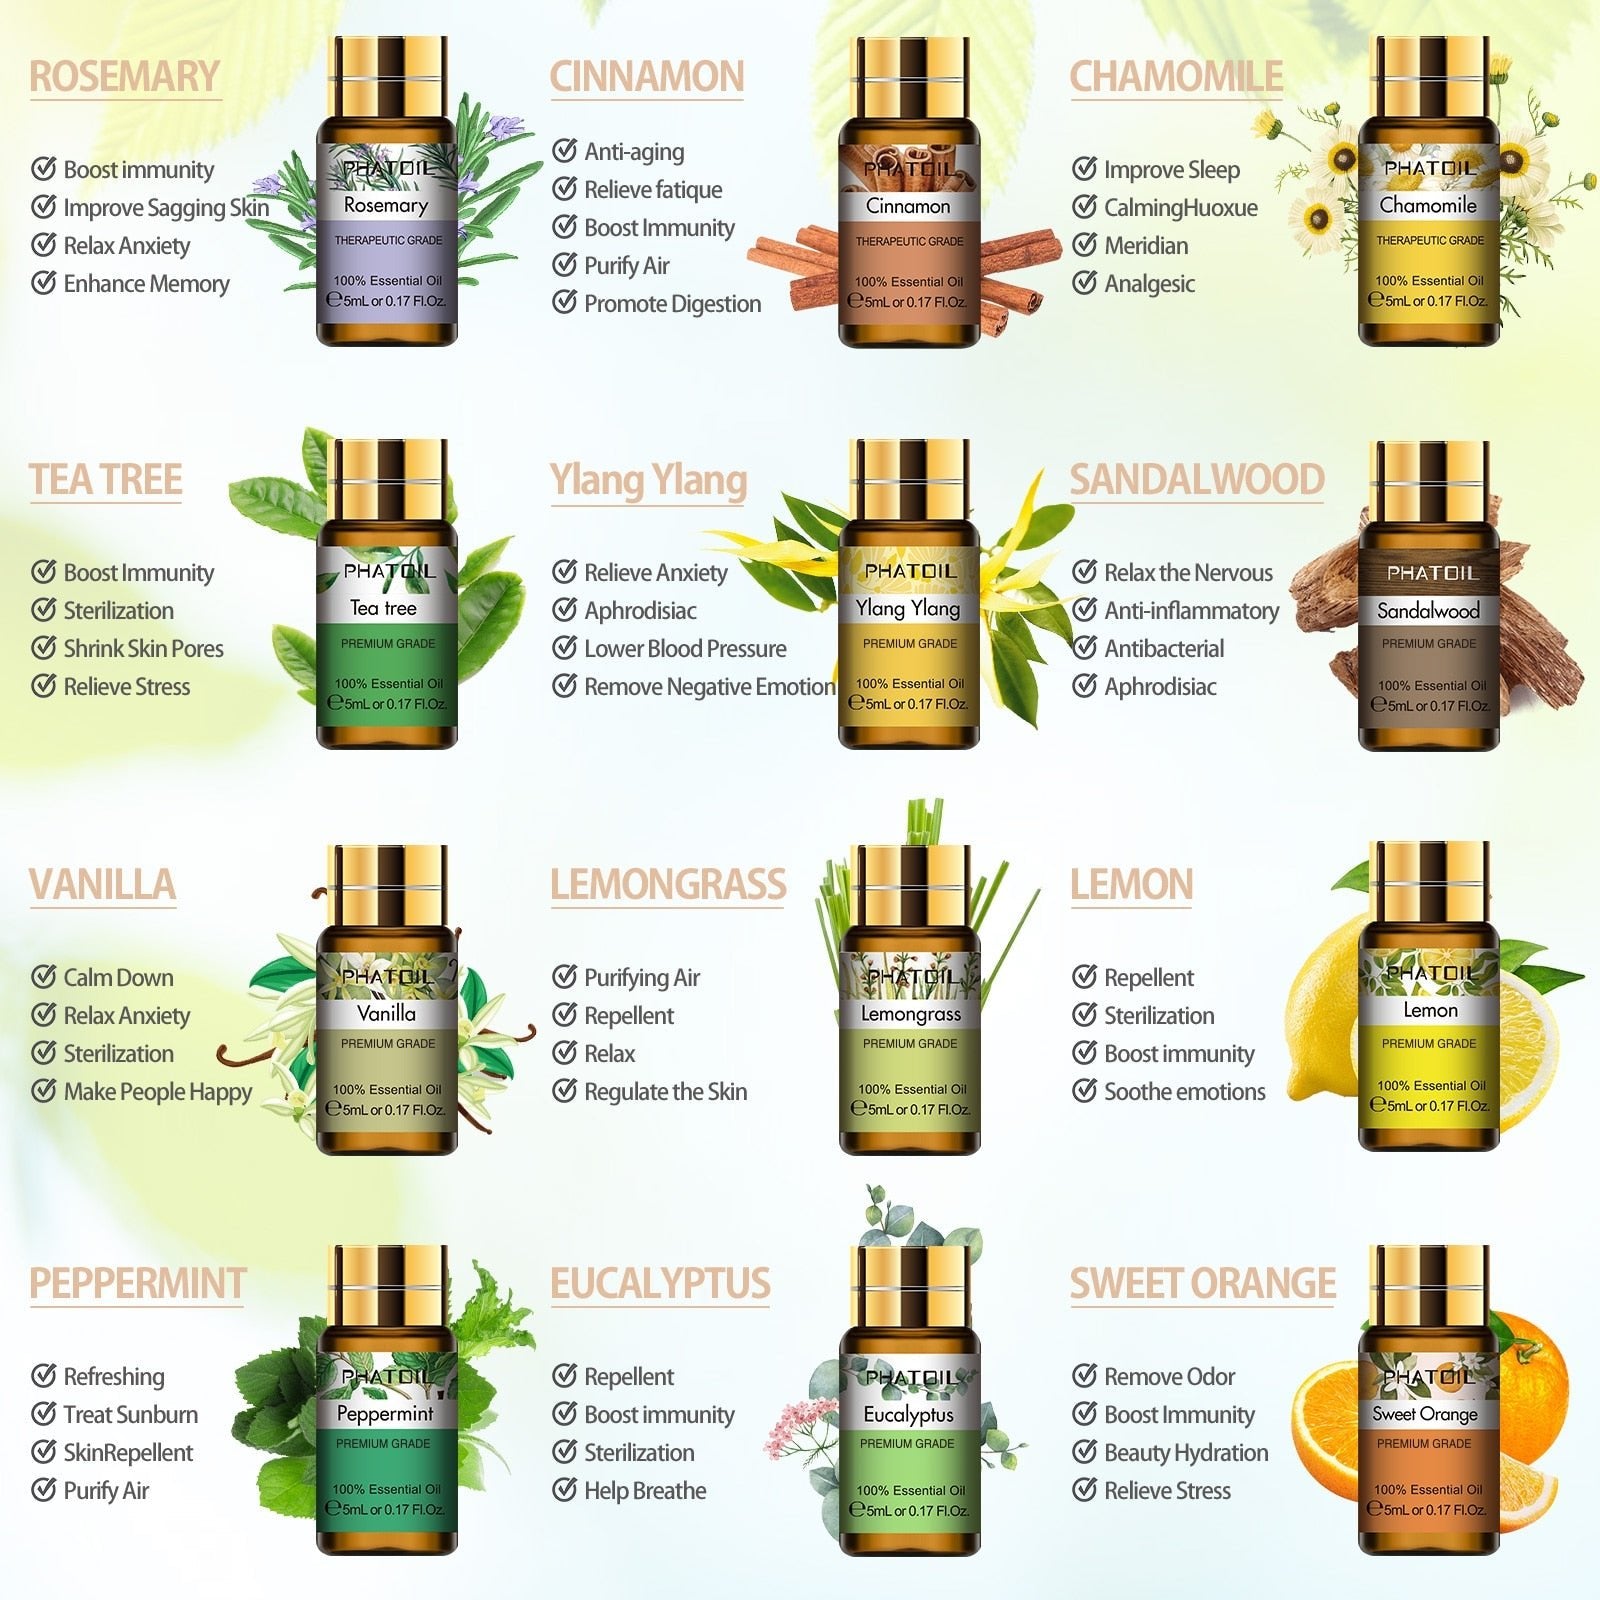 Essential Oils and essential oils diffuser, Tea tree